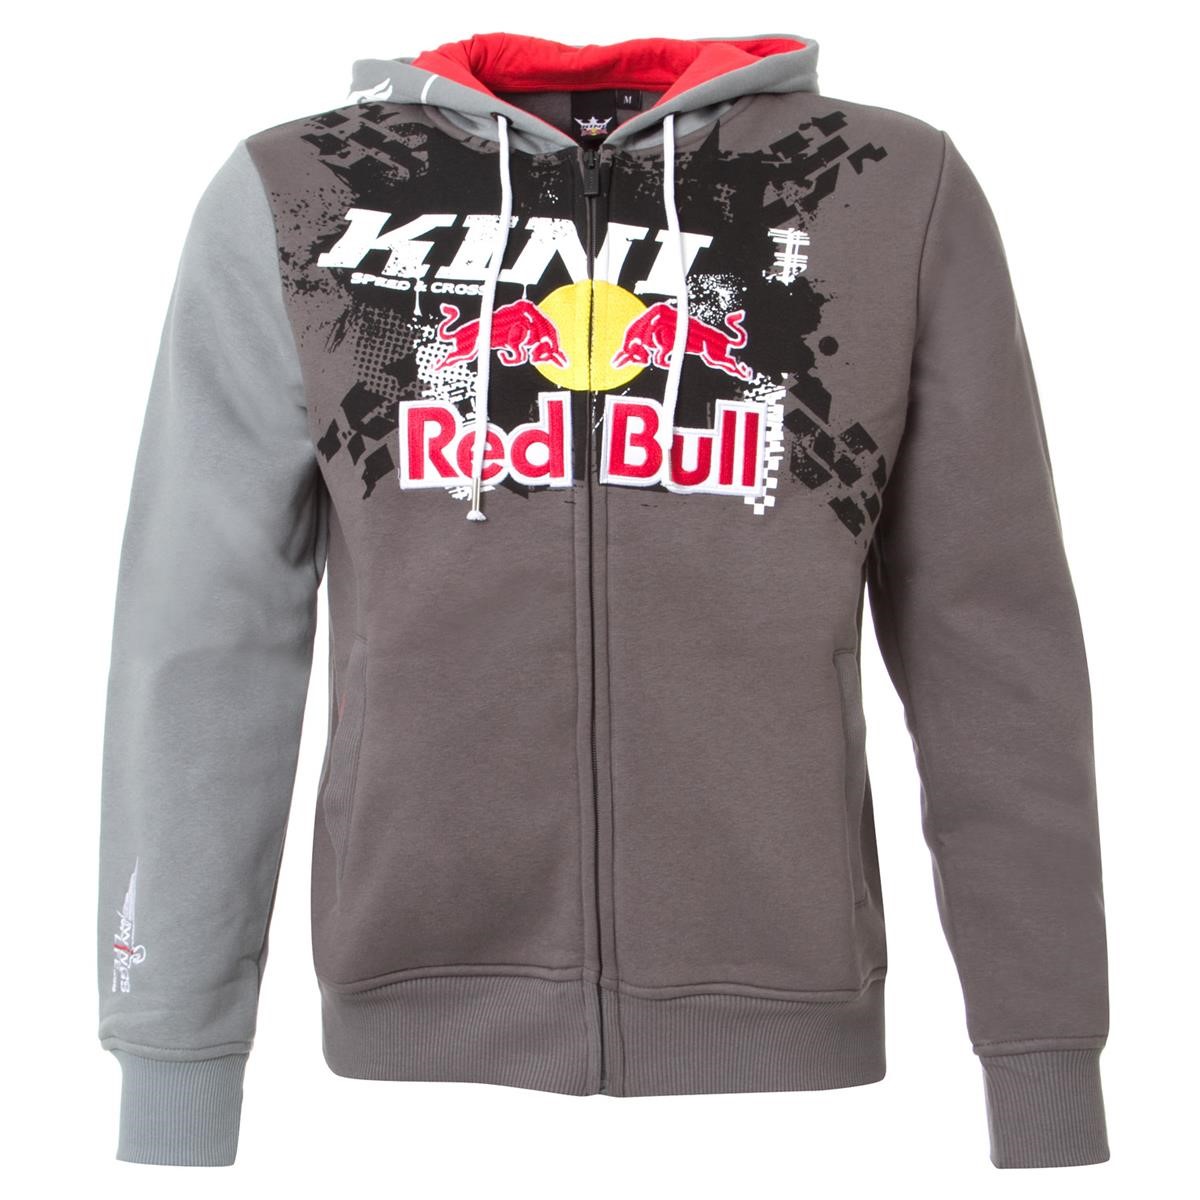 Kini Red Bull Zip-Hoody Crossed Grau/Dunkelgrau